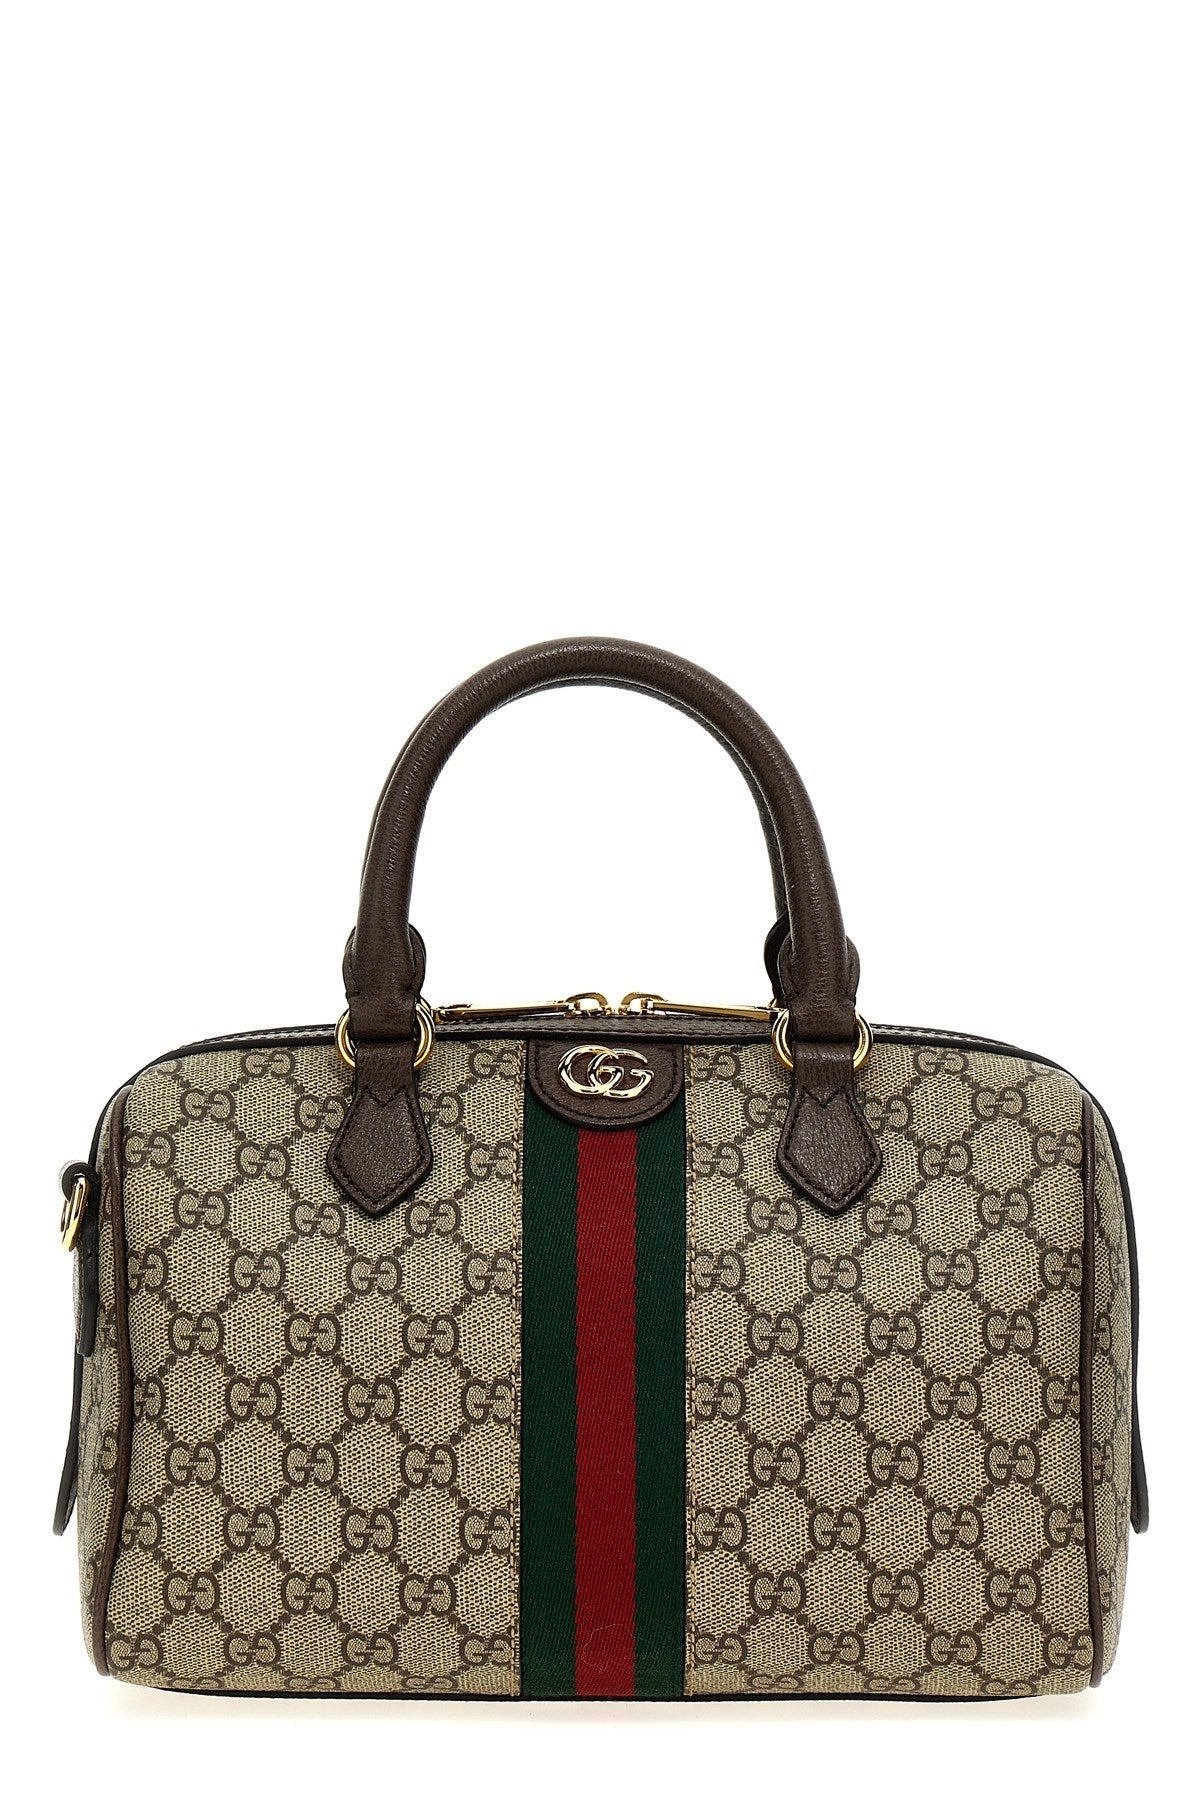 Gucci Women 'Ophidia Gg' Small Handbag - 1